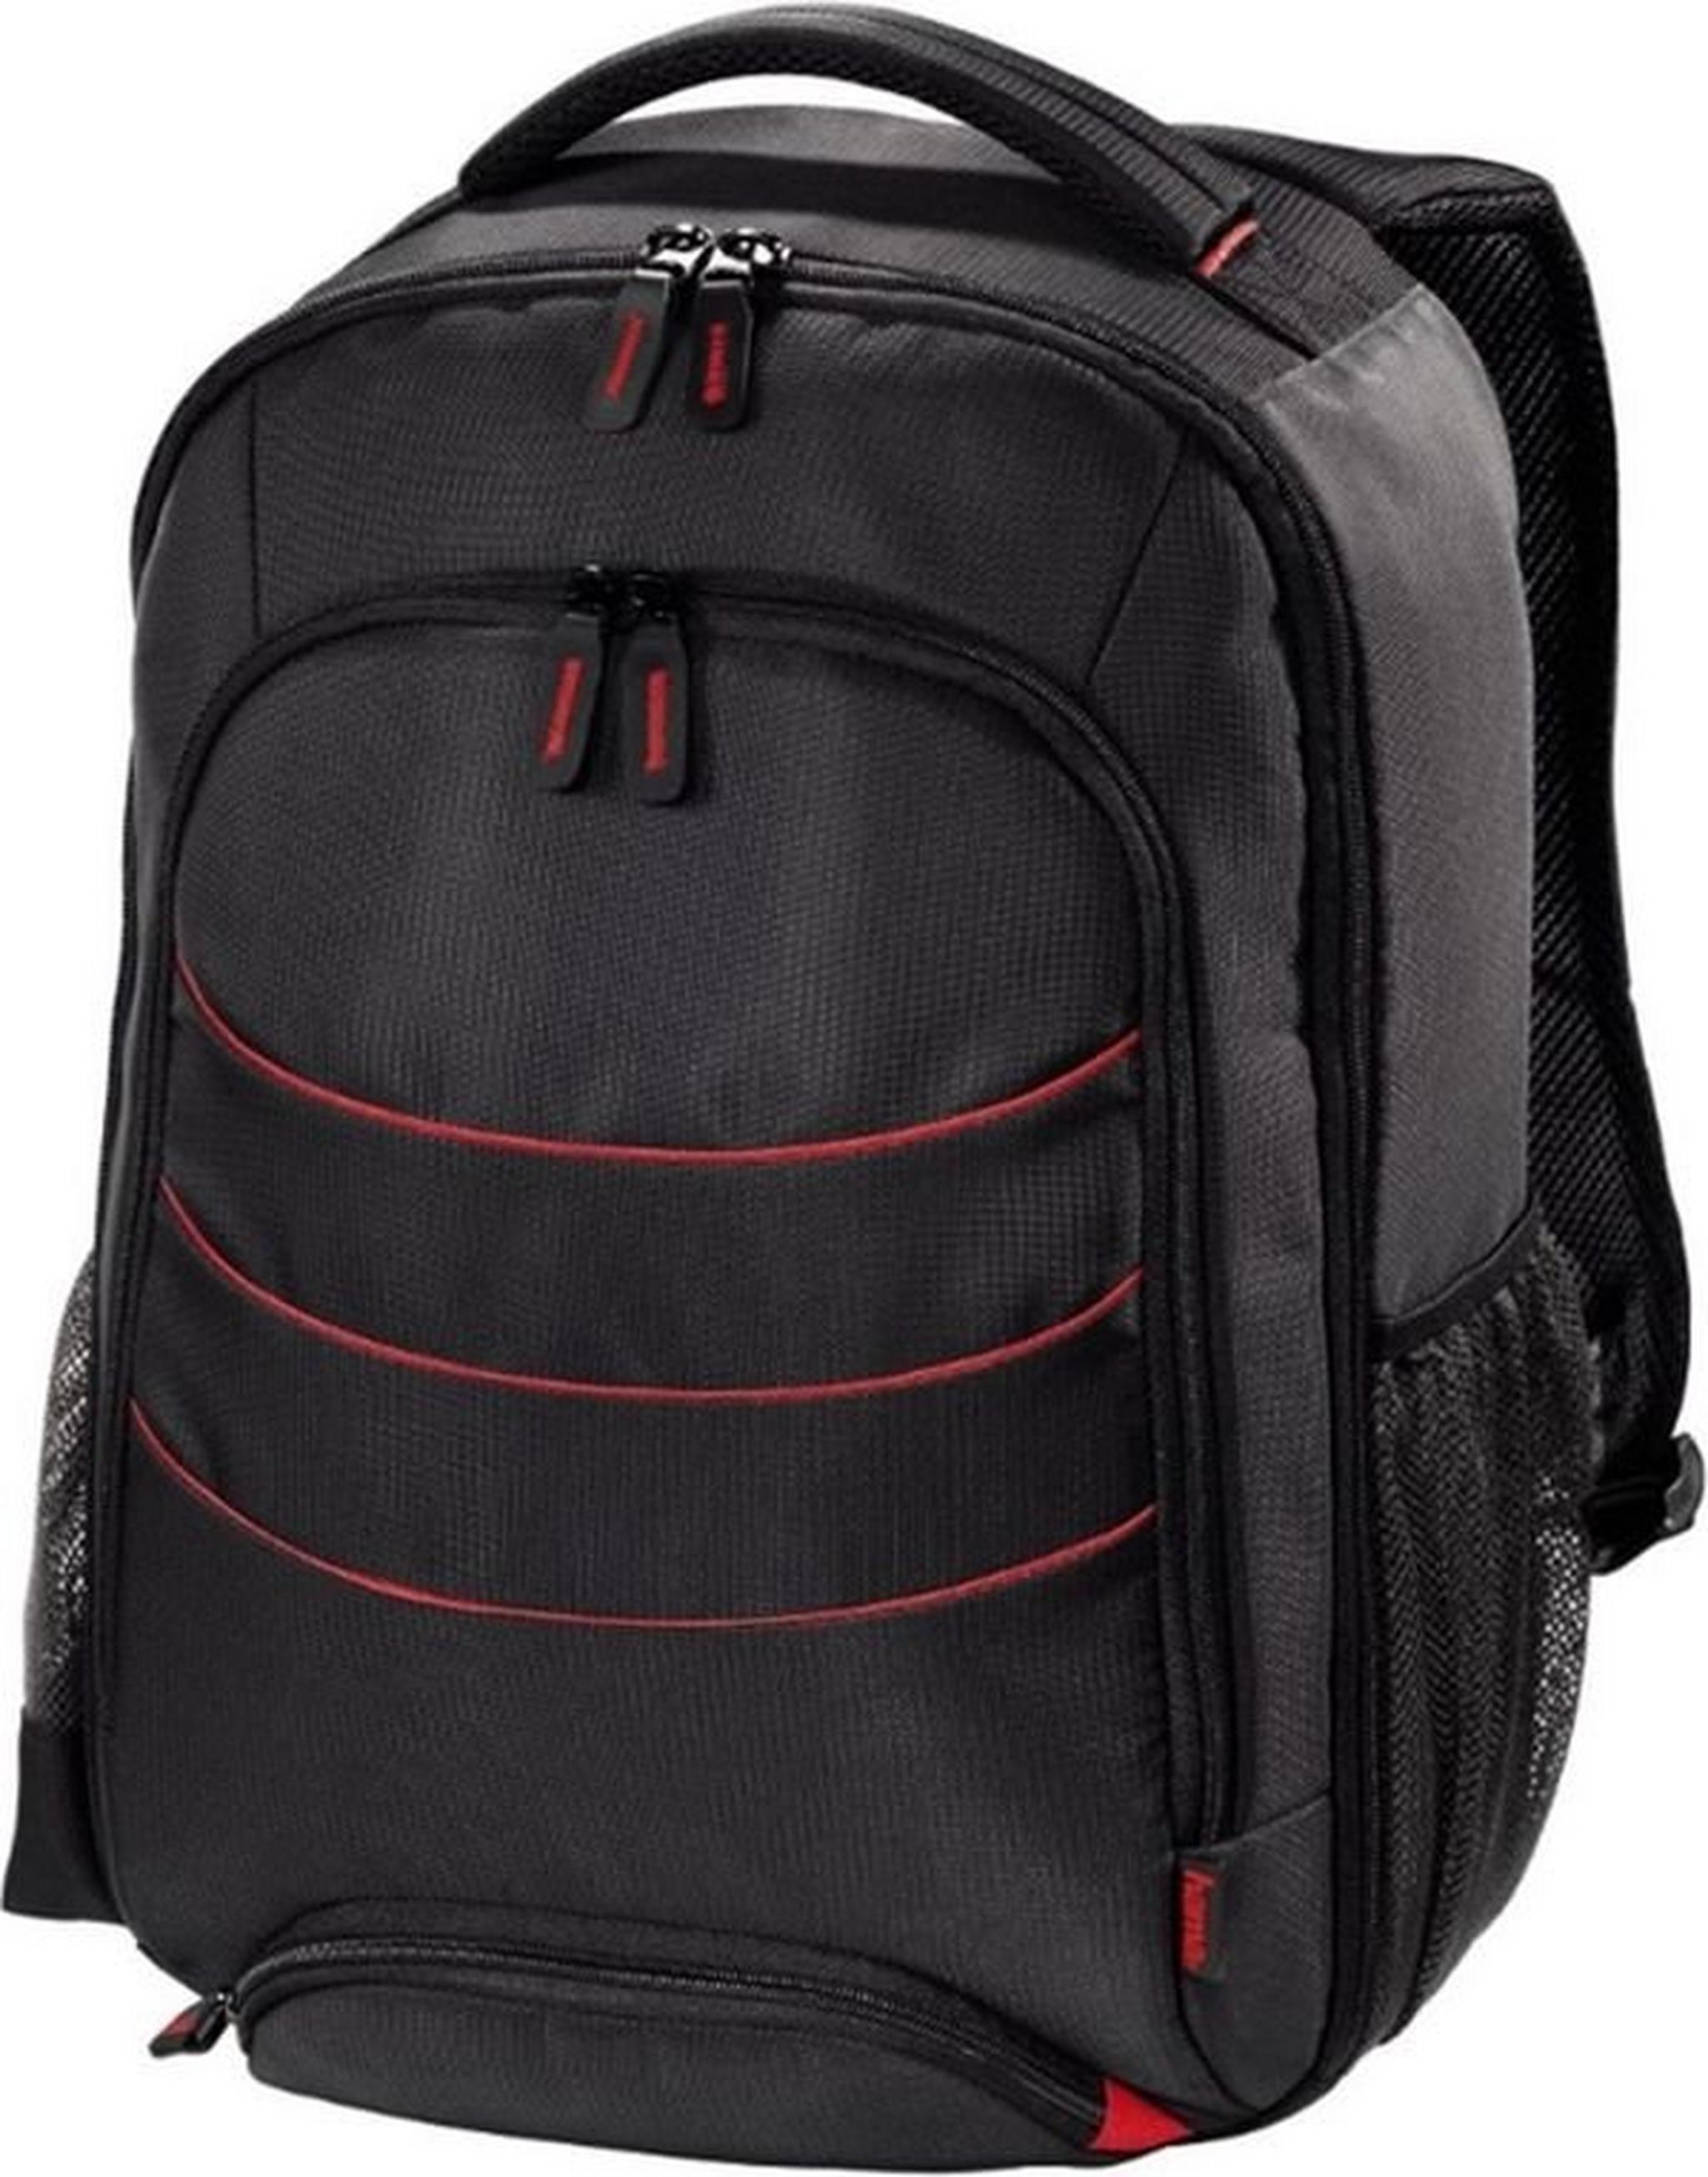 Hama Camera Backpack Miami 190 (126682) - Black/Red